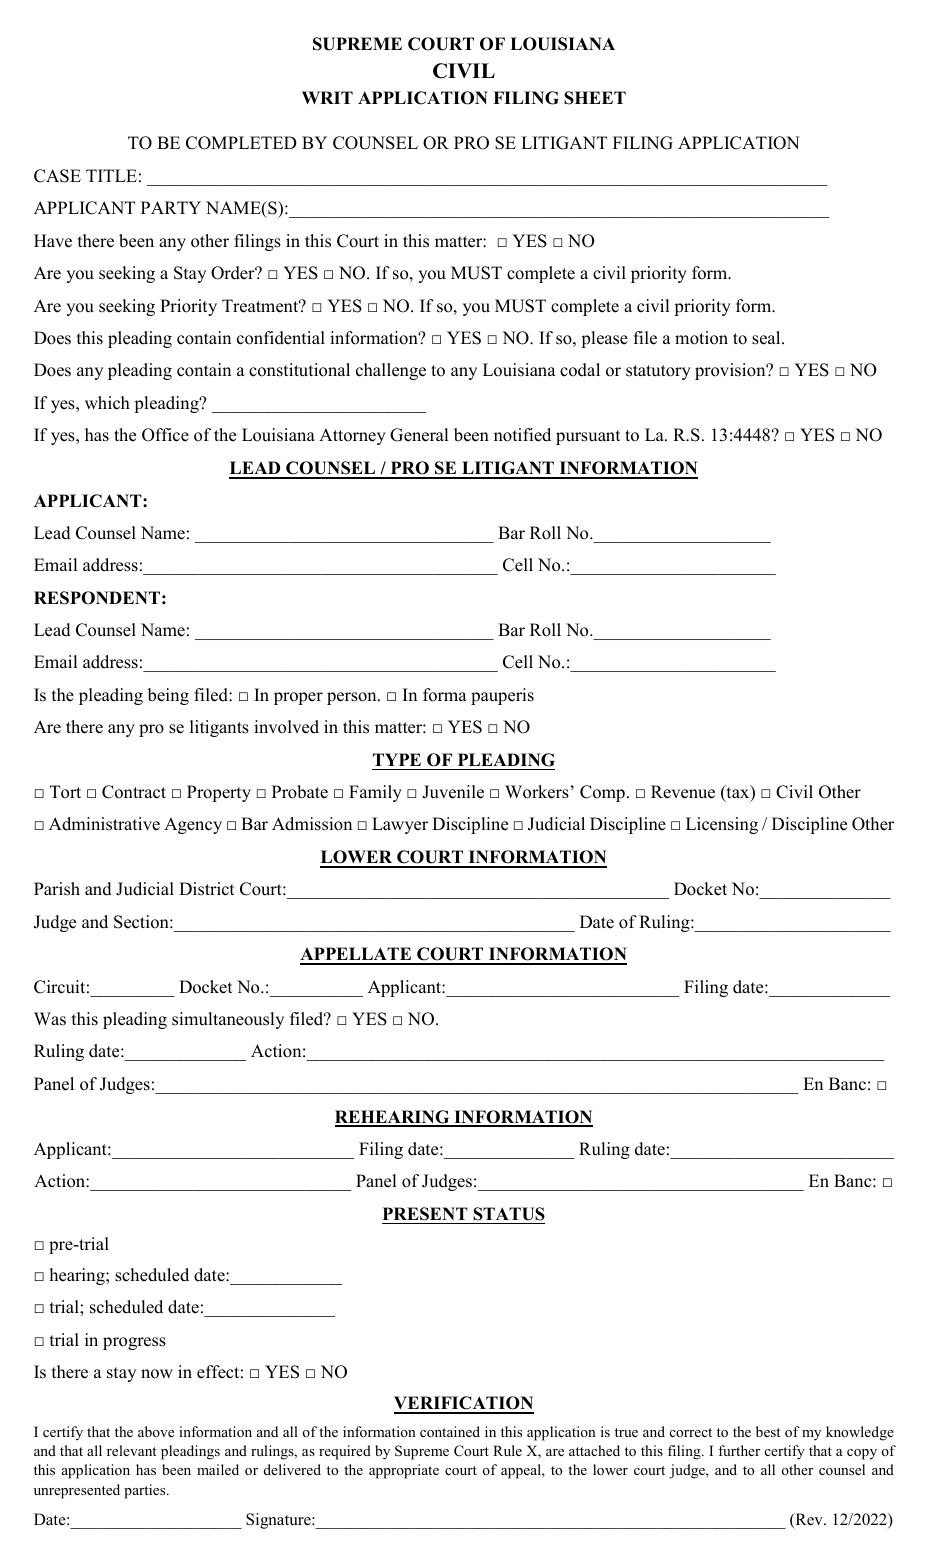 Civil Writ Application Filing Sheet - Louisiana, Page 1